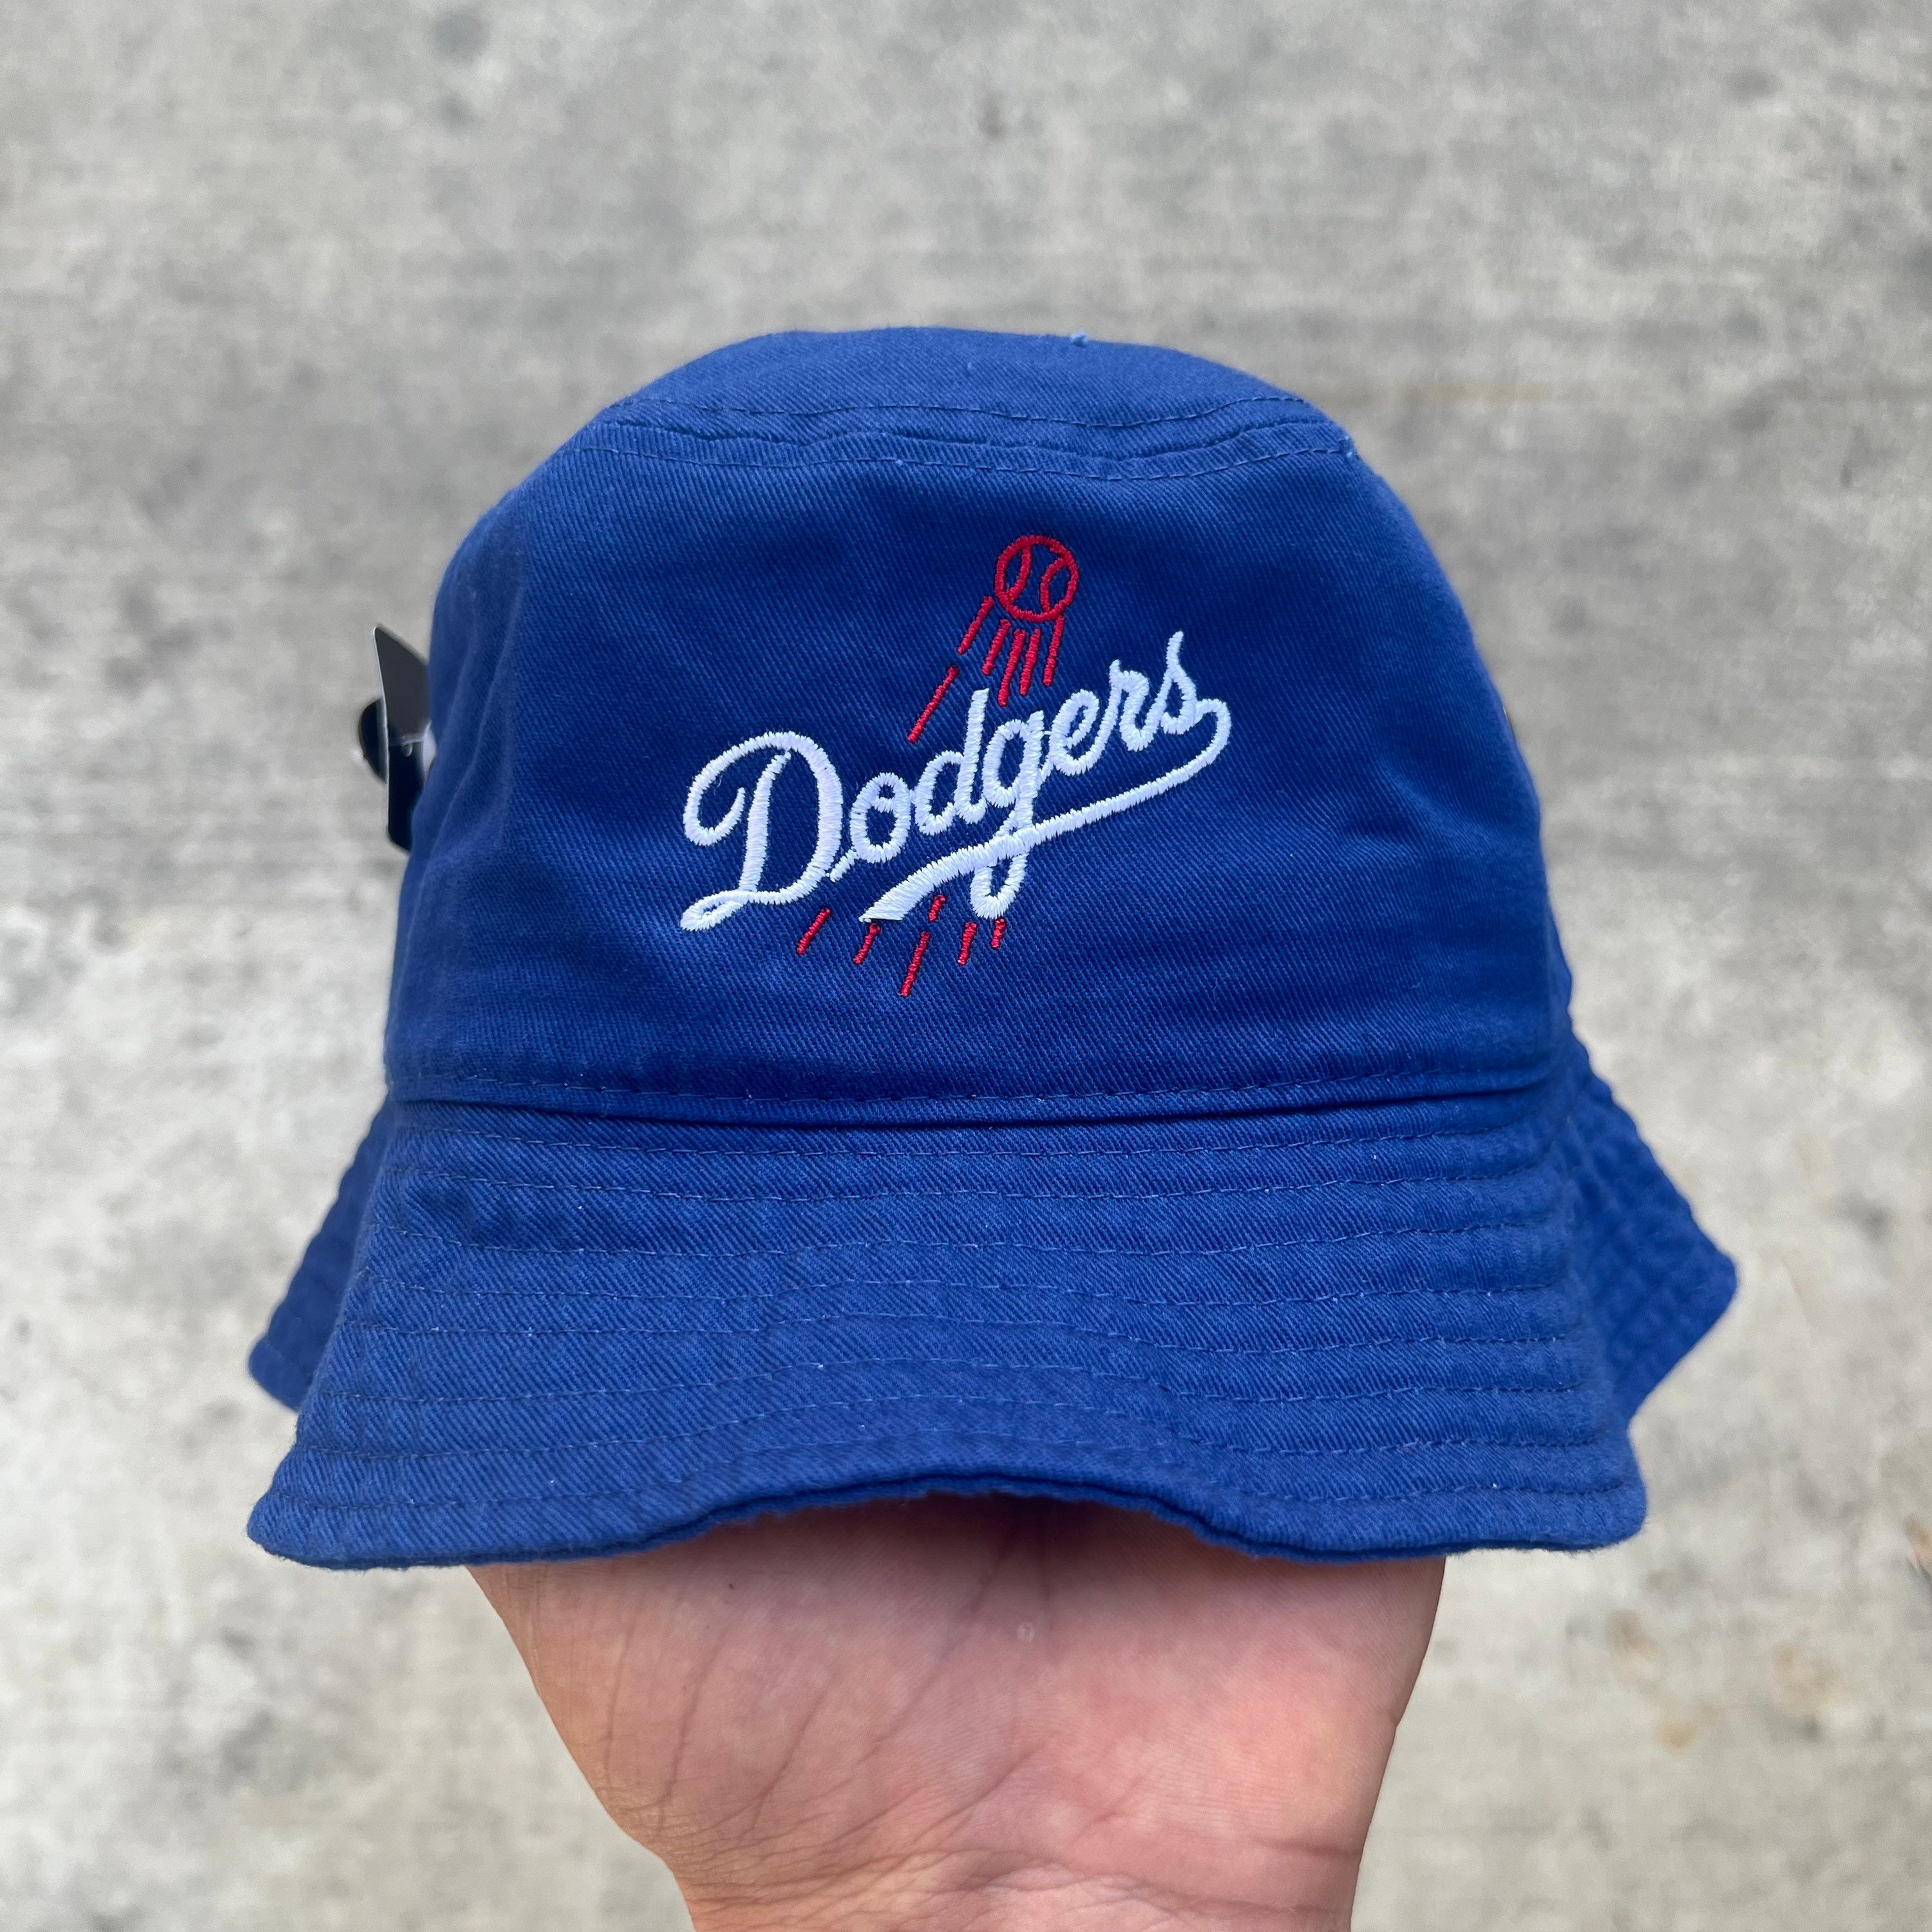 New Era L.A. Dodgers Royal Blue Hat Cap worn by Bad Bunny in UN